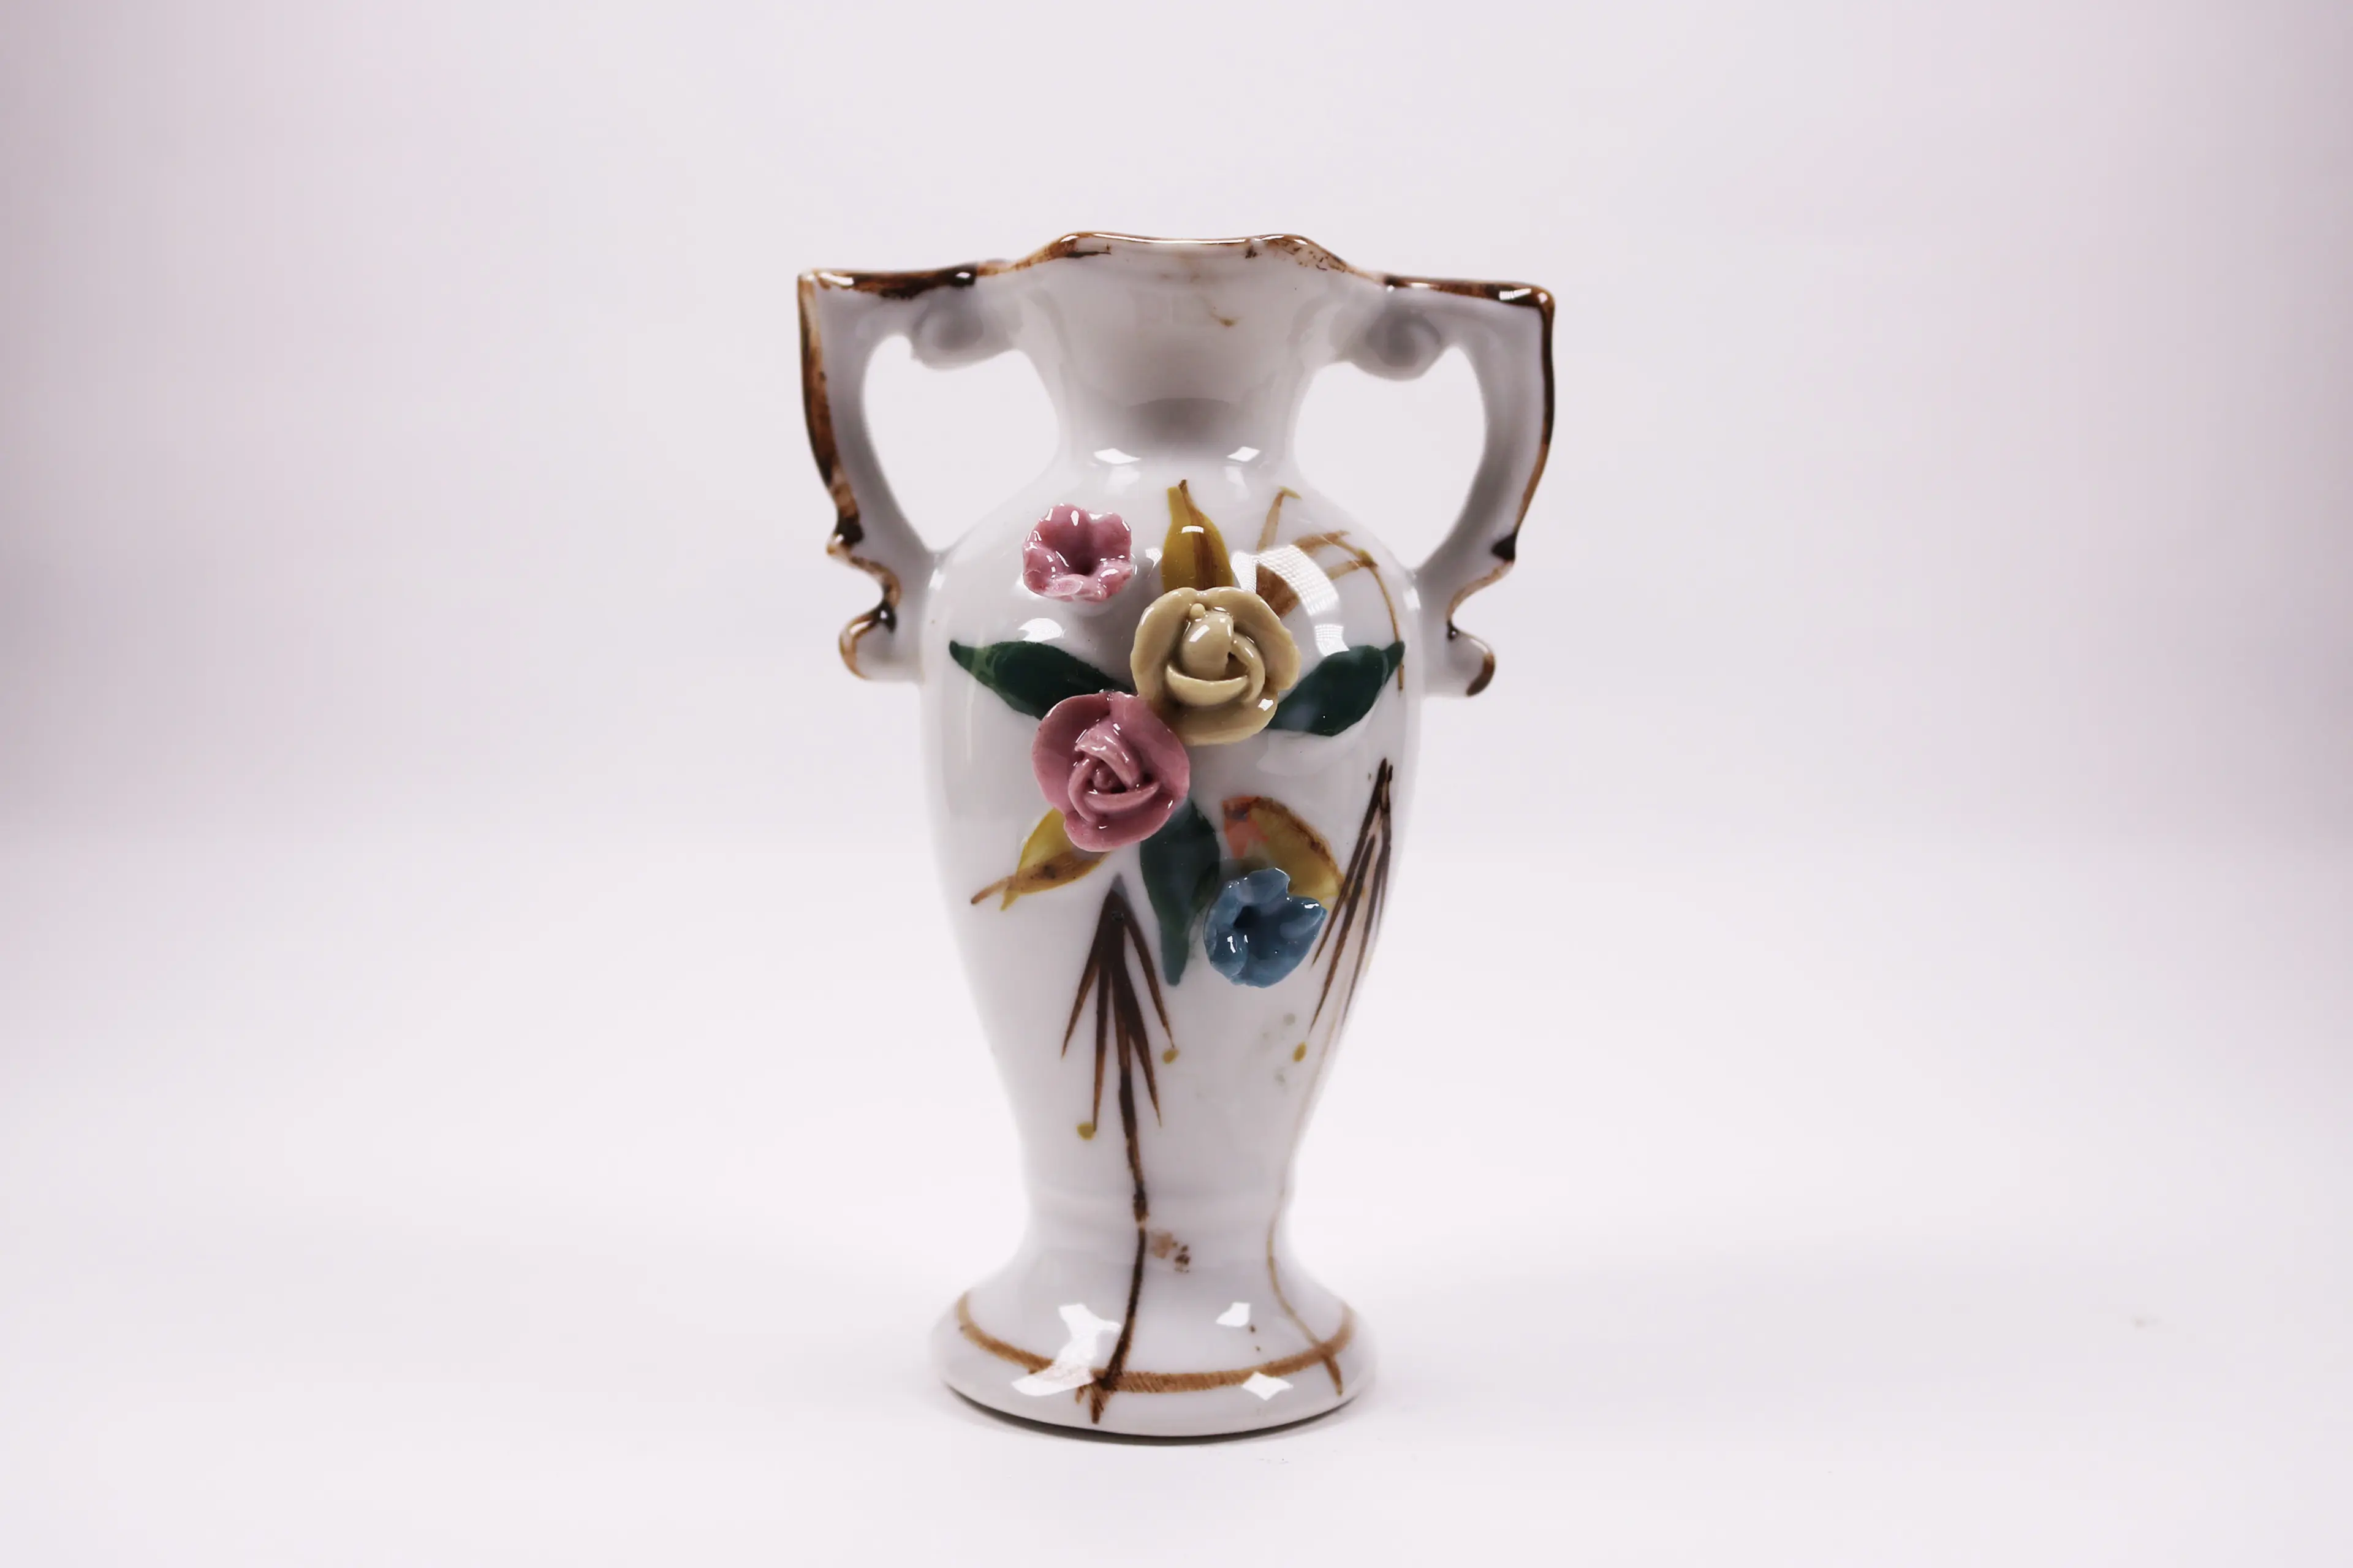 Vintage Vase Mini With Two Handles